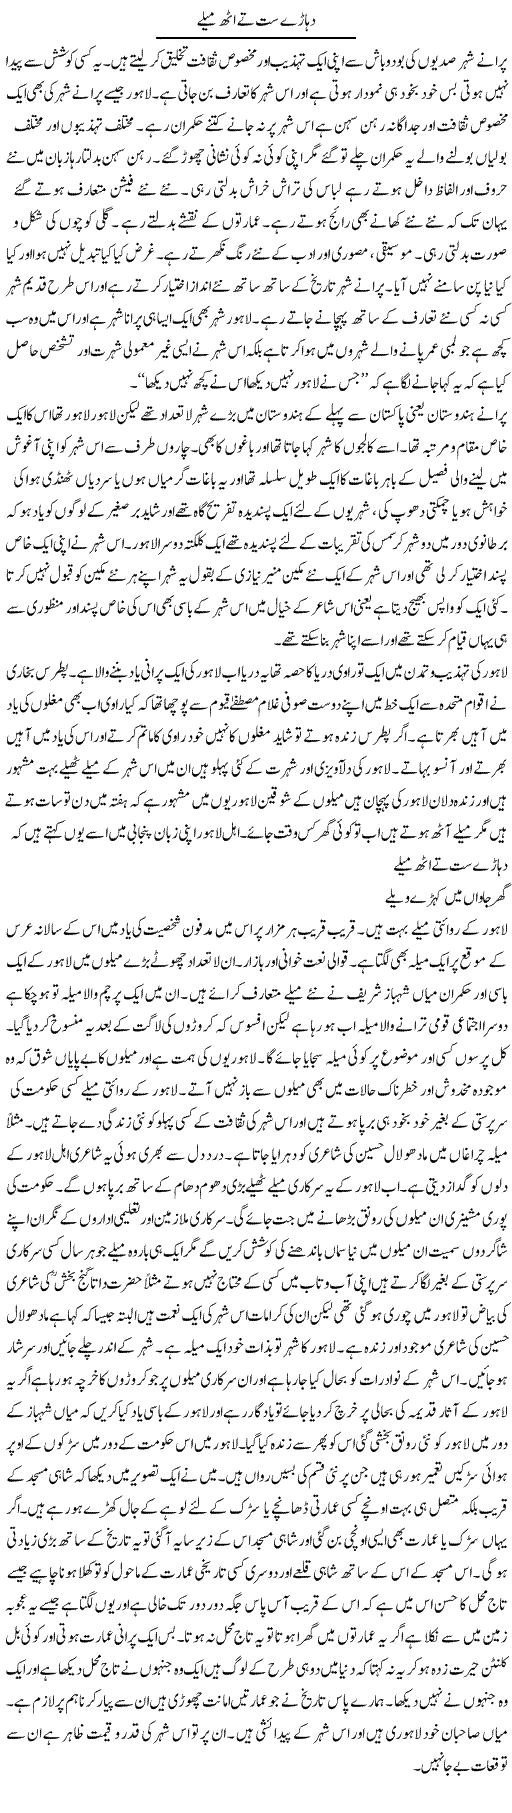 Dihare Sath Te Ath Maile | Abdul Qadir Hassan | Daily Urdu Columns